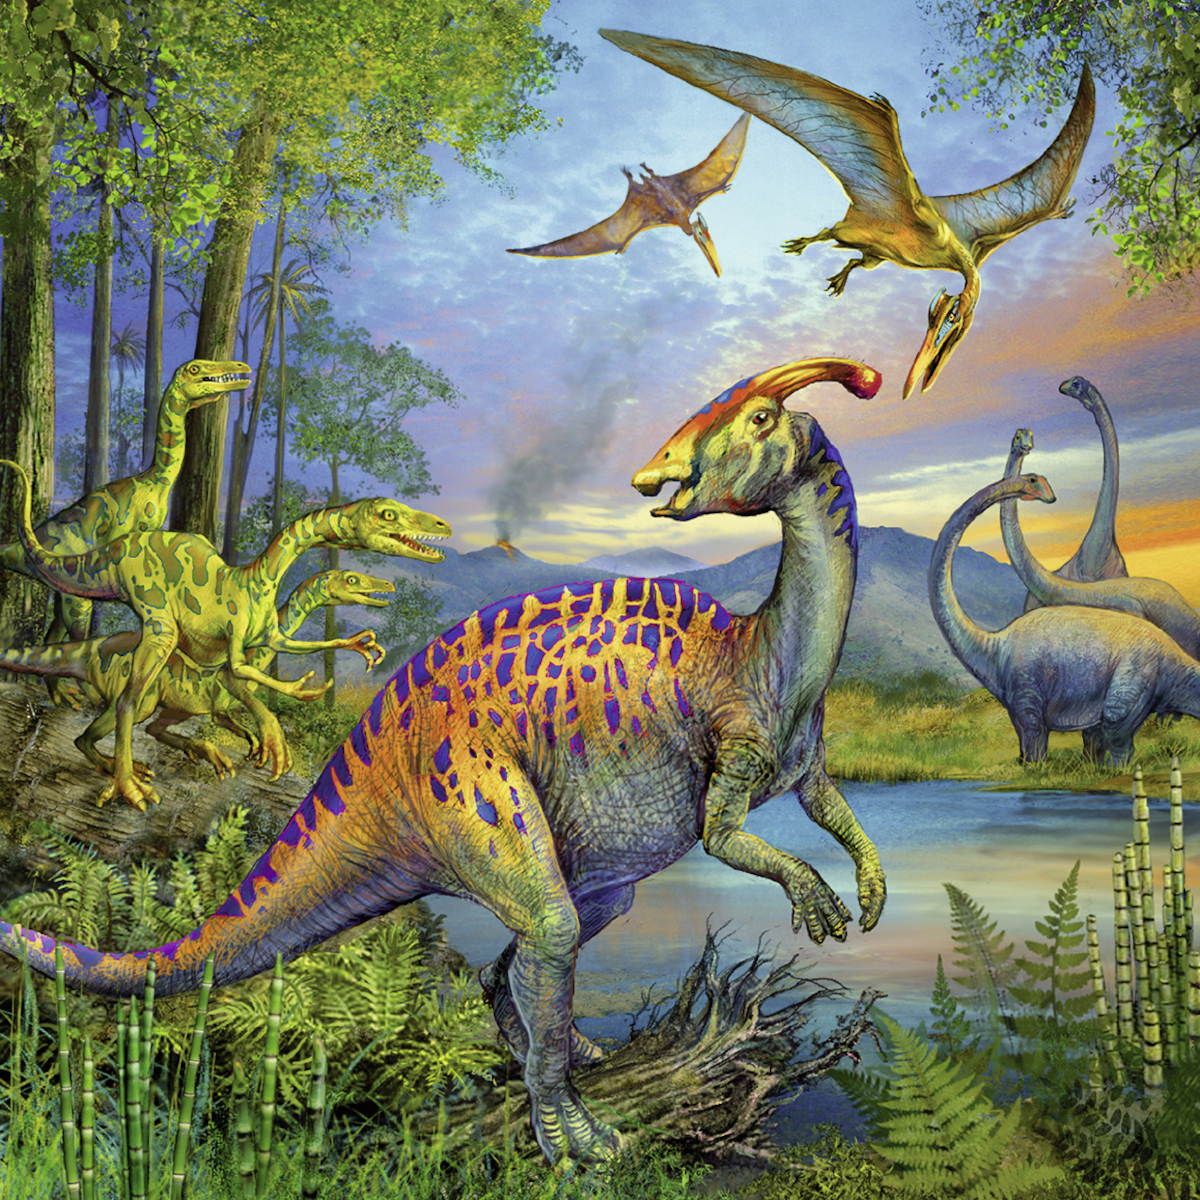 Faszination Mehrfarbig Puzzle Dinosaurier RAVENSBURGER